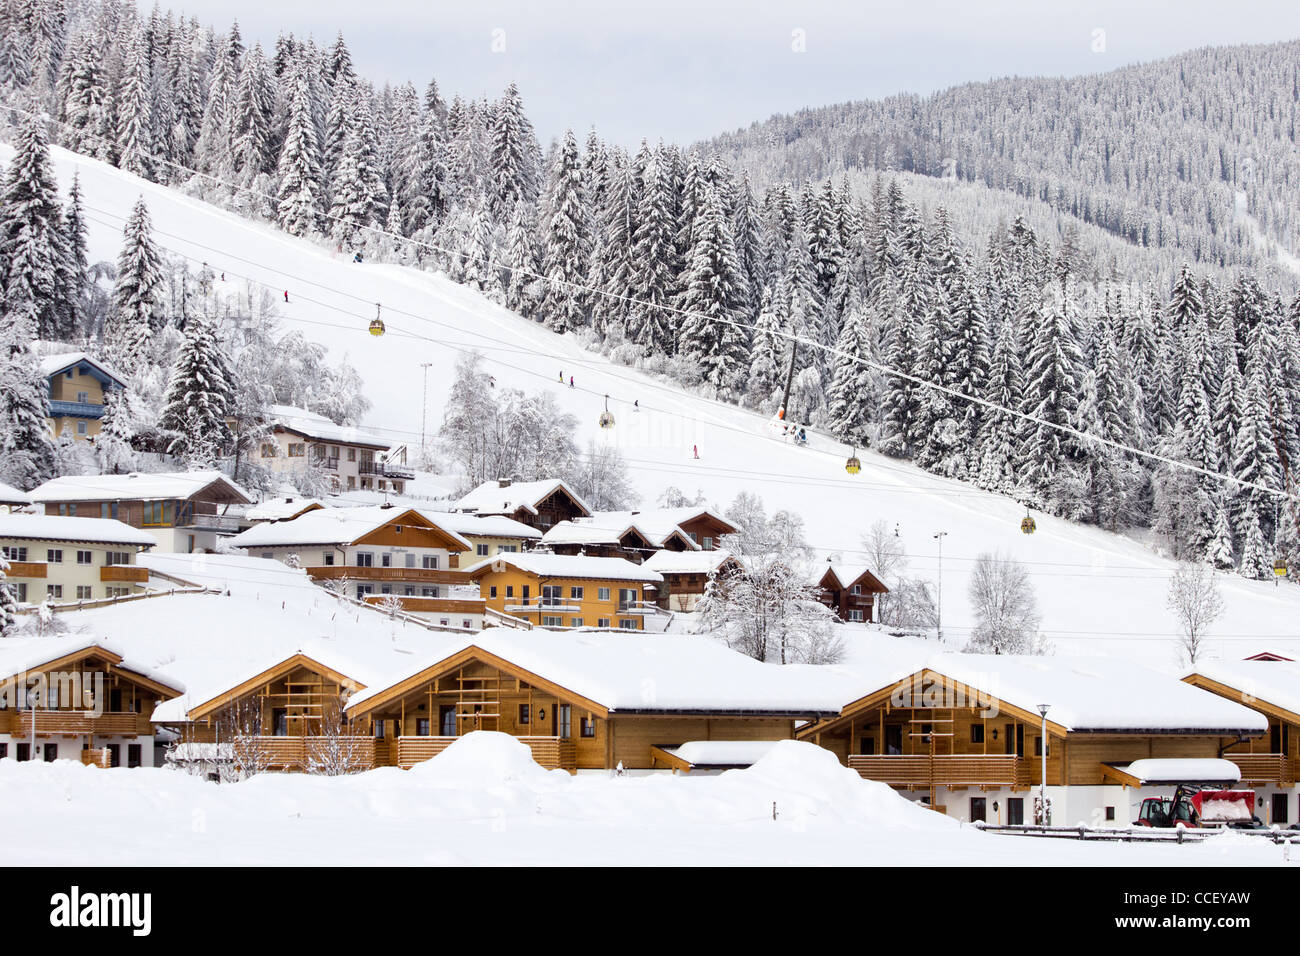 Ski slope at Flachau. A ski resort in the Austrian Alps. Stock Photo